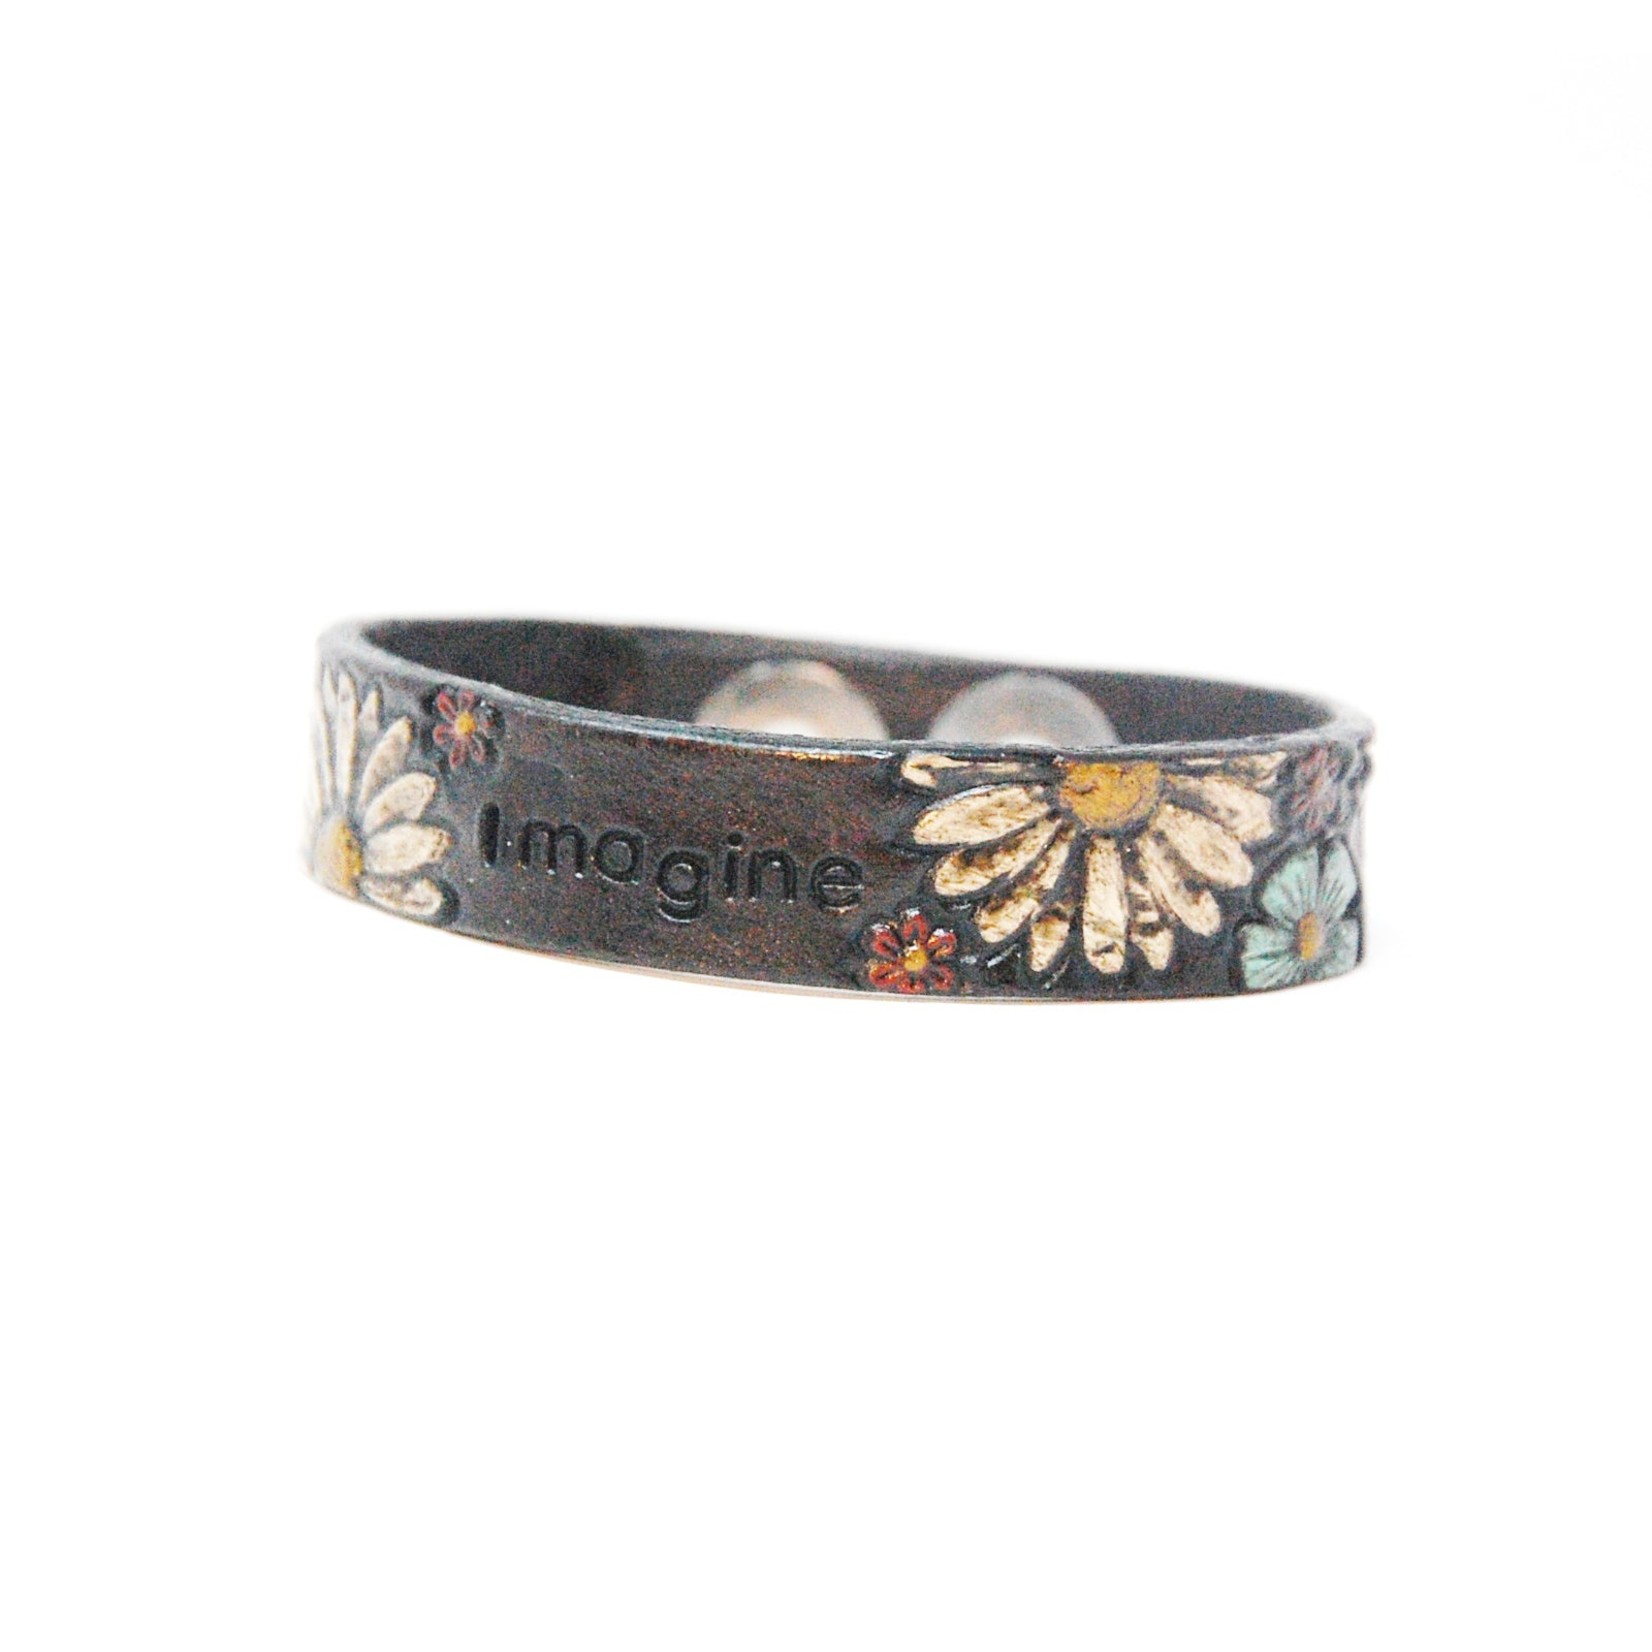 Fearless hART Stamped Flower Leather Bracelet